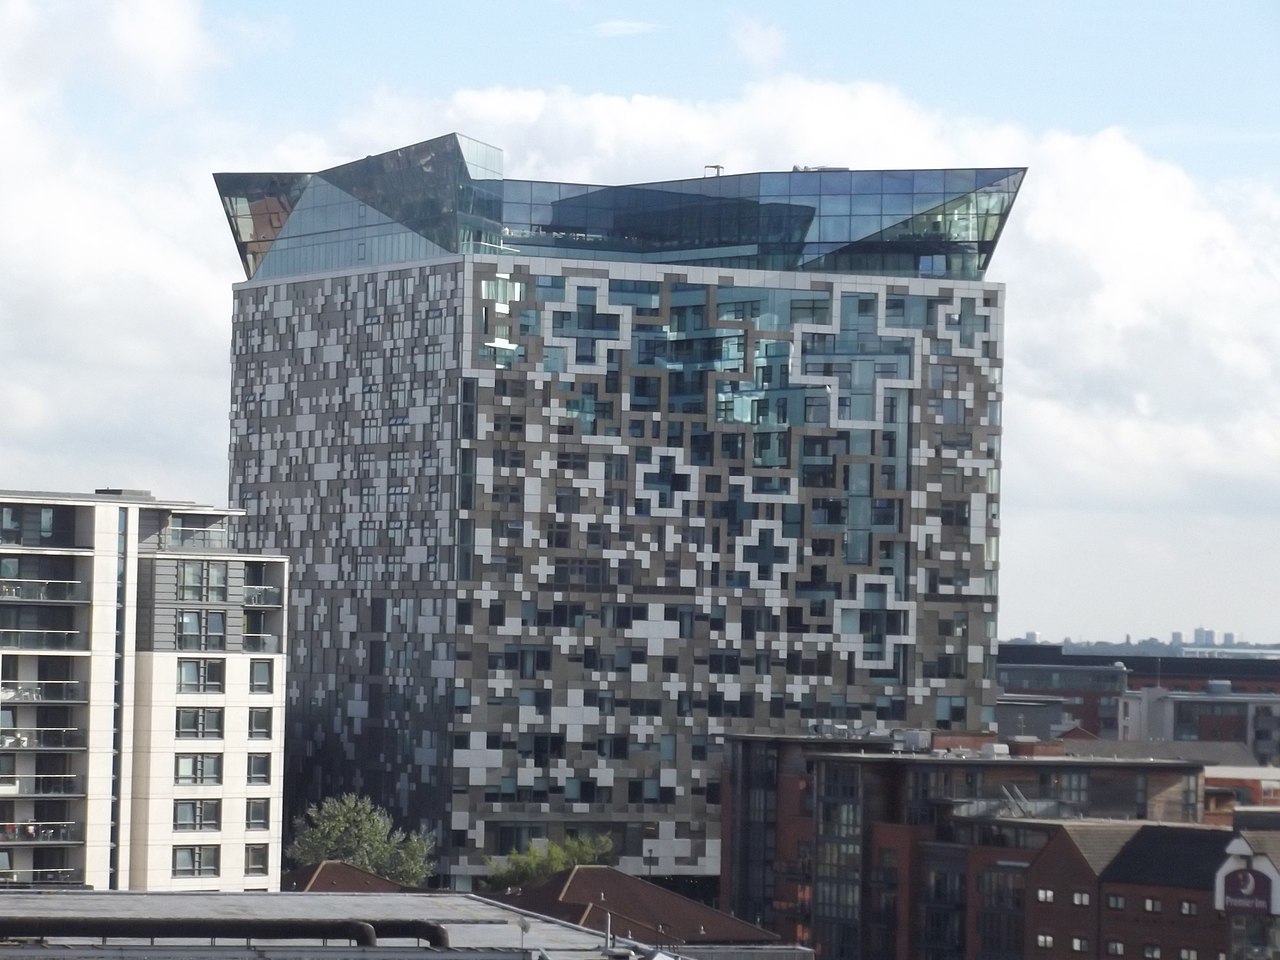 The Cube in Birmingham, SRA headquarters